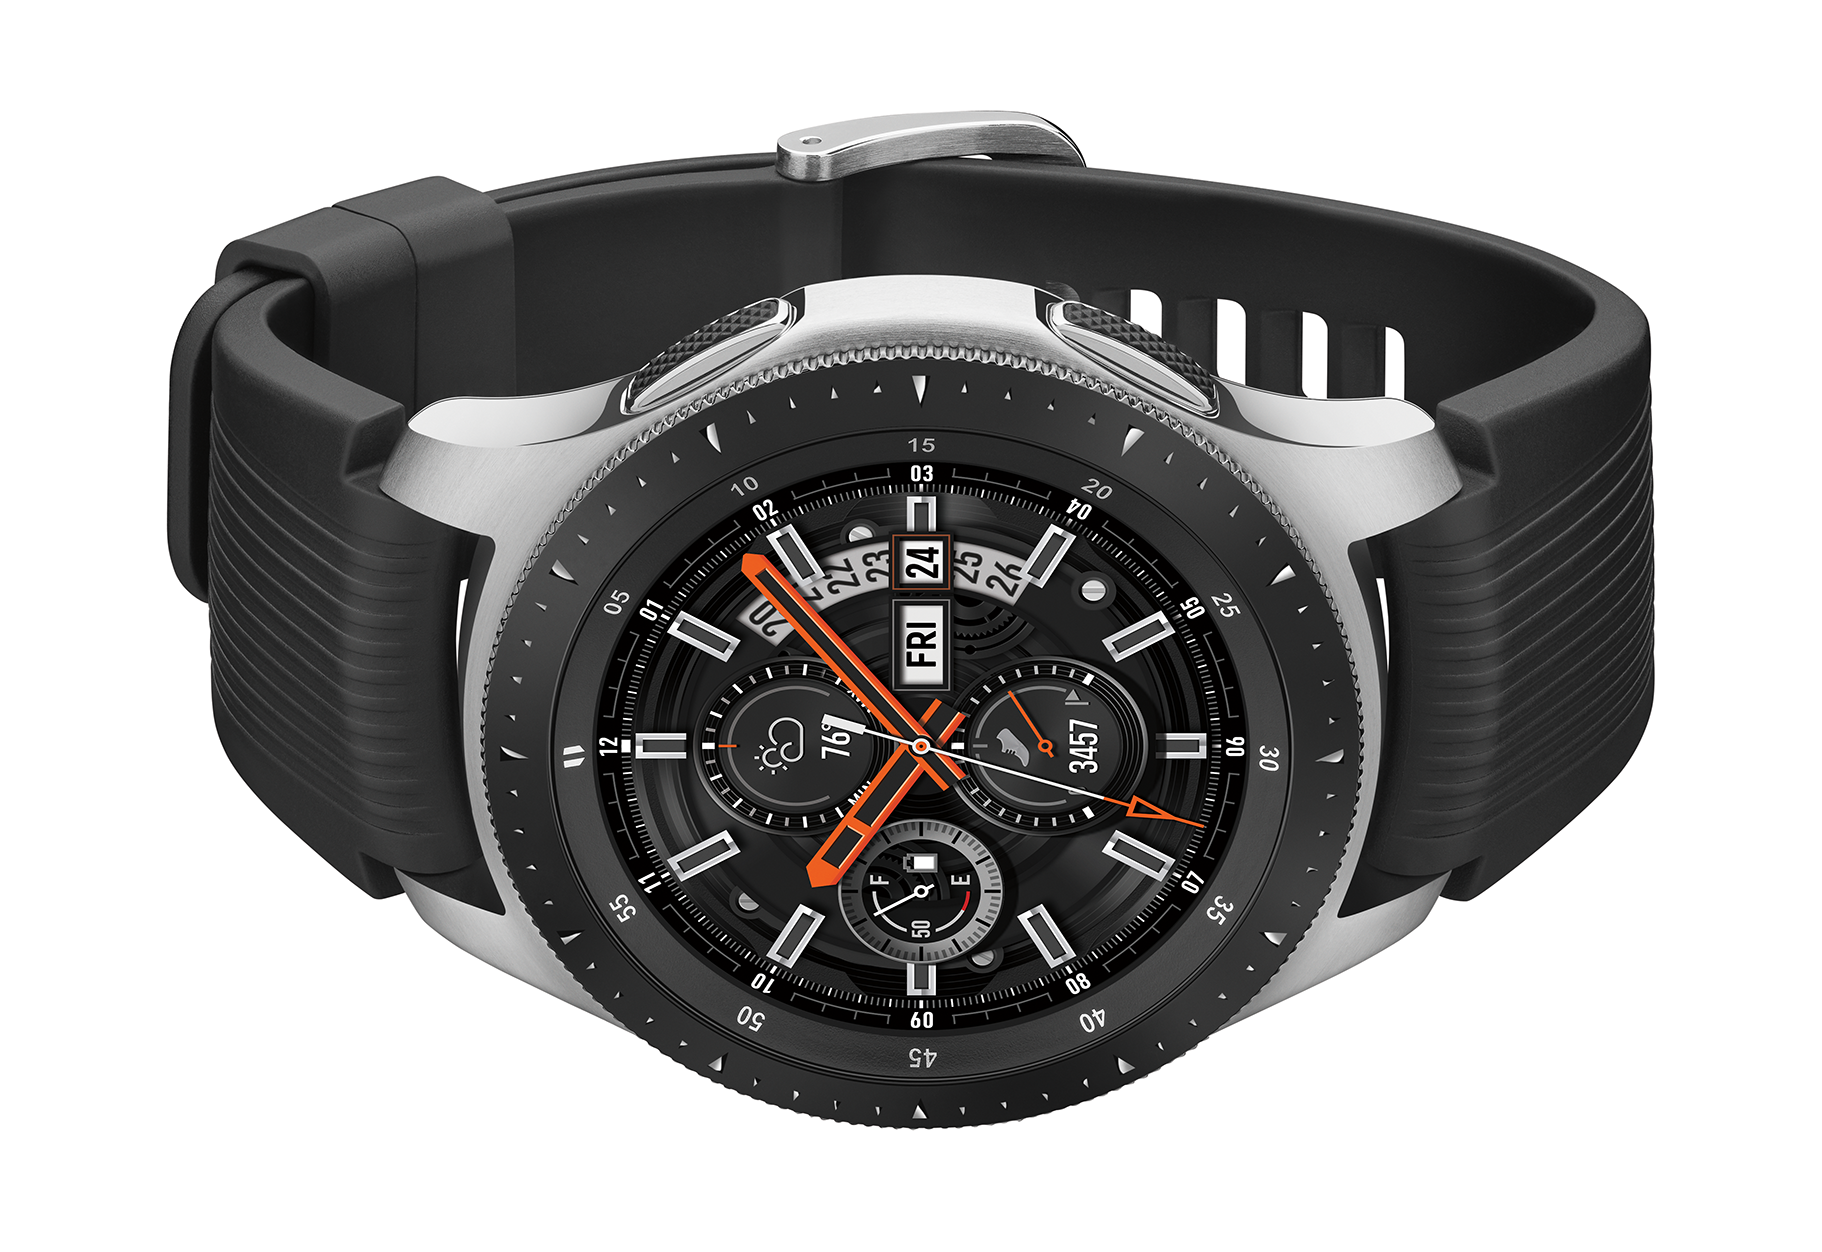 SAMSUNG Galaxy Watch - Bluetooth Smart Watch (46mm) - Silver - SM-R800NZSAXAR - image 5 of 15